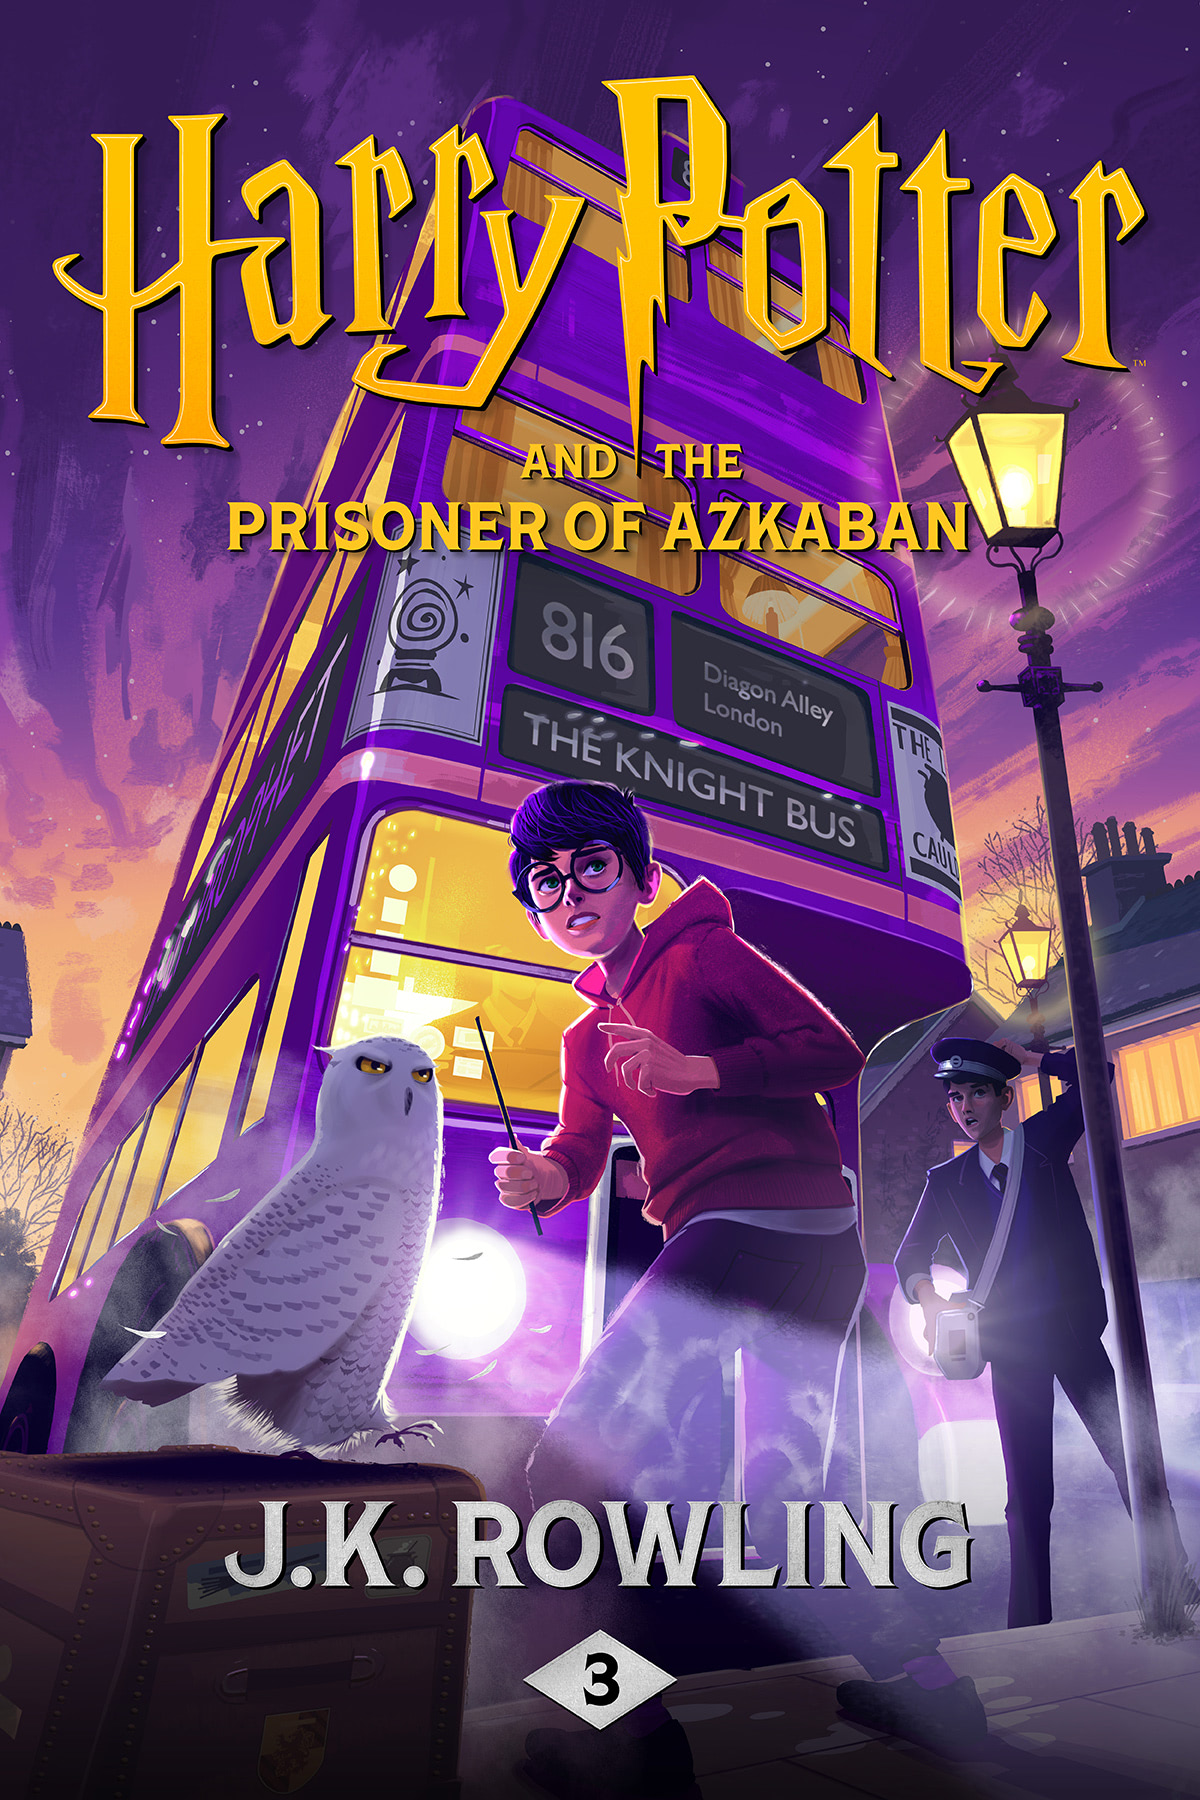 ‘Prisoner of Azkaban’ 2022 Pottermore eBook/audiobook cover